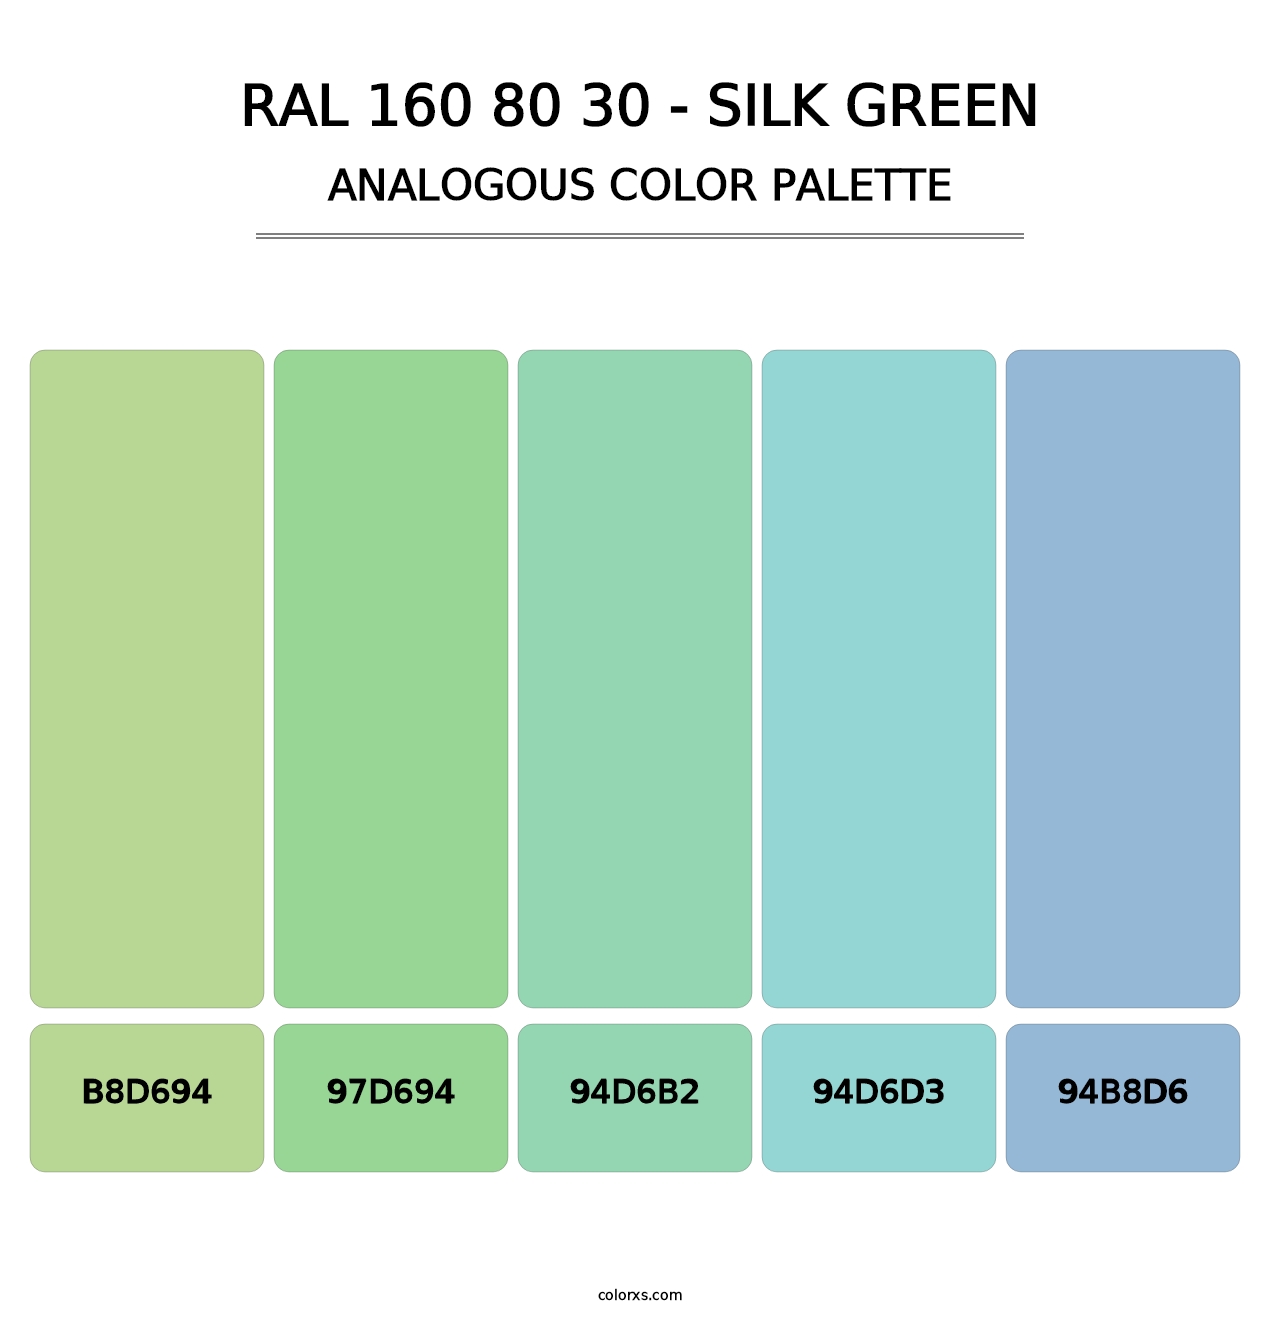 RAL 160 80 30 - Silk Green - Analogous Color Palette